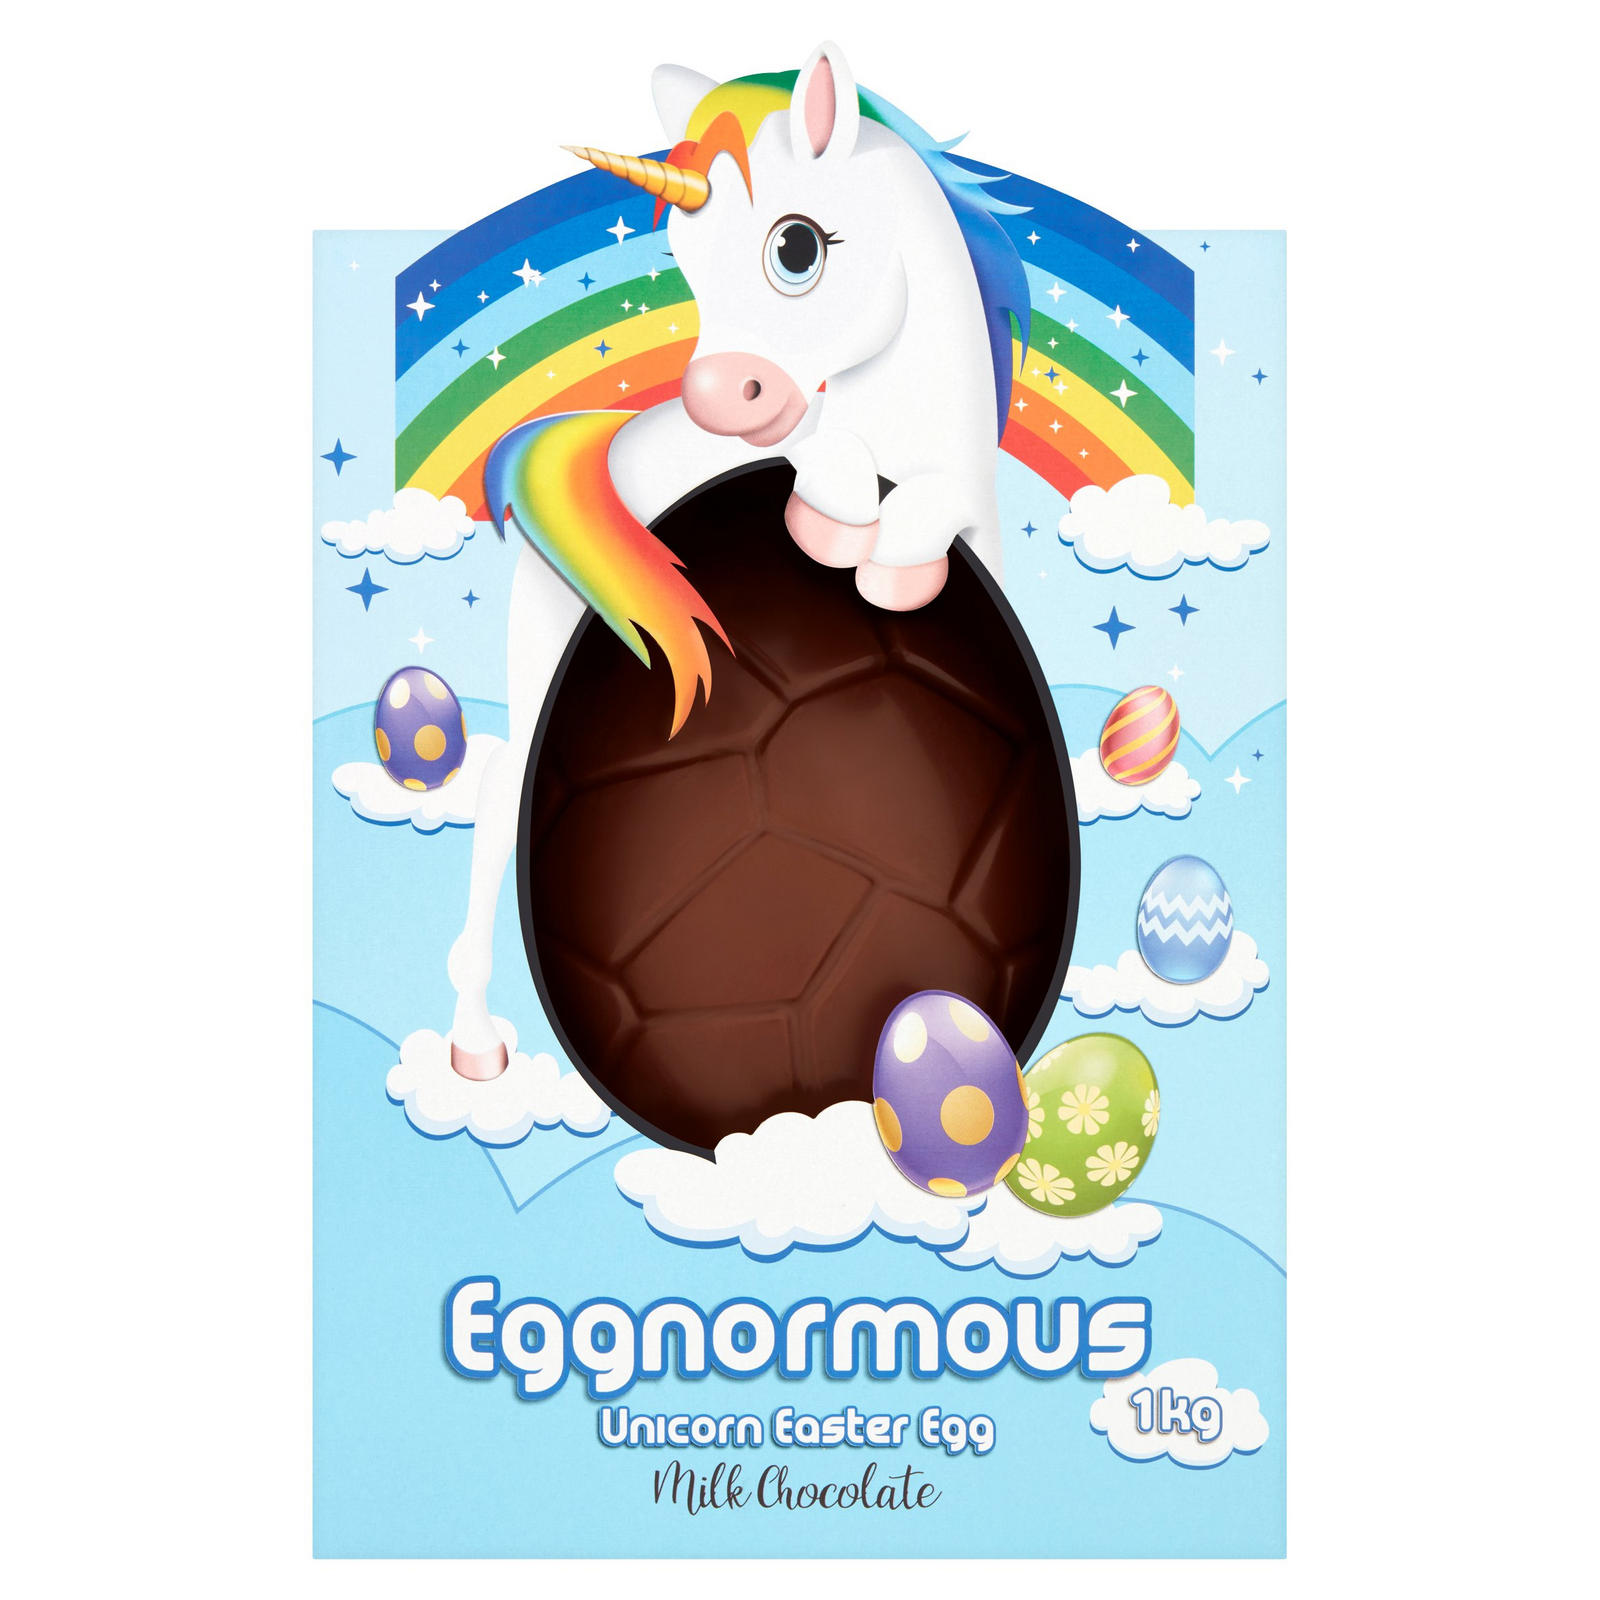 Premier Chocolate Eggnormous Unicorn Easter Egg Milk Chocolate 1kg